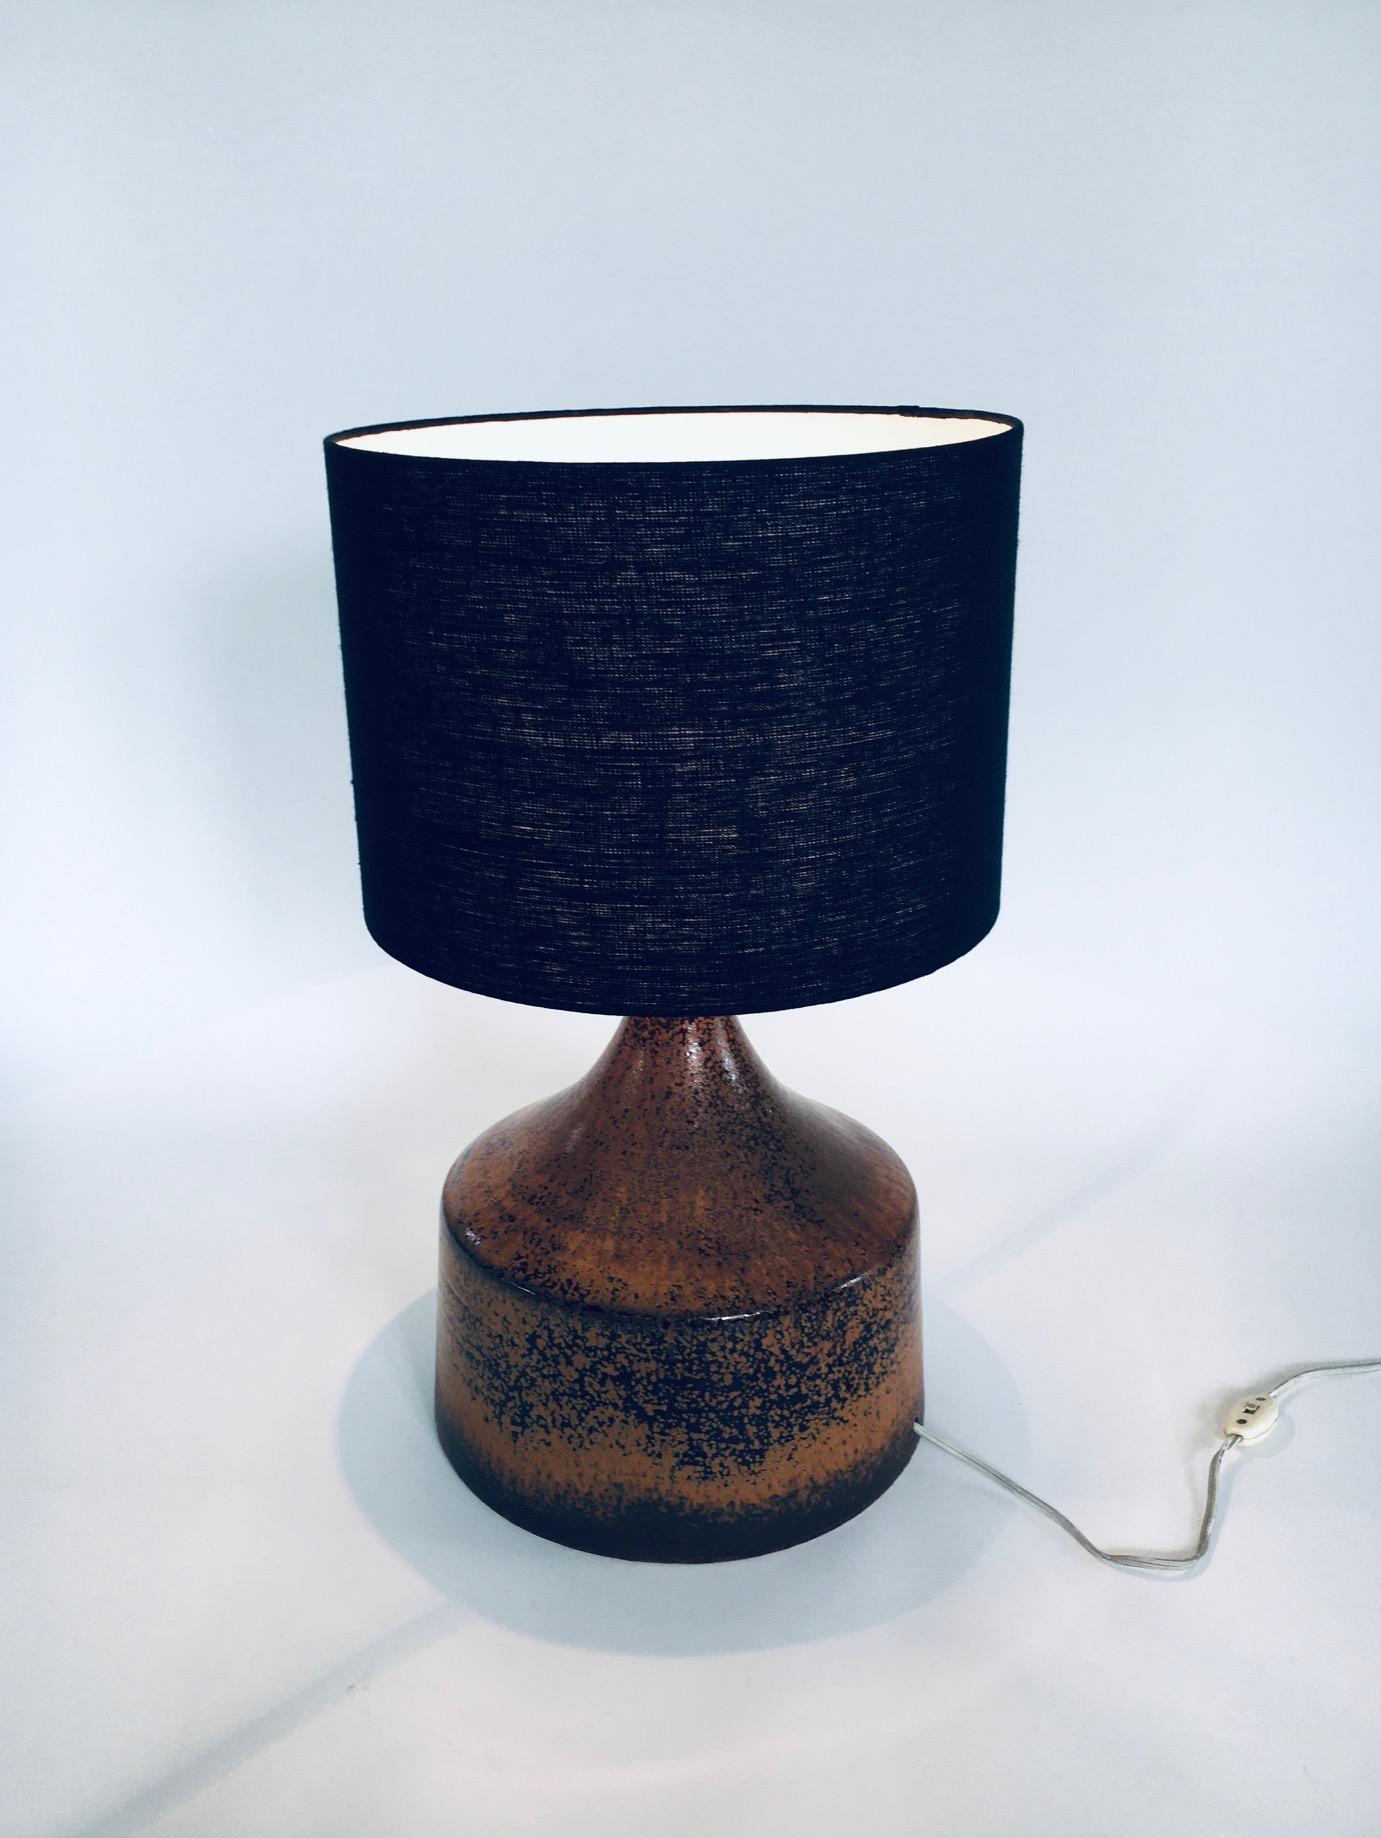 Midcentury Scandinavian Design Ceramic Table Lamp by Aypot, Sweden 1970's For Sale 6